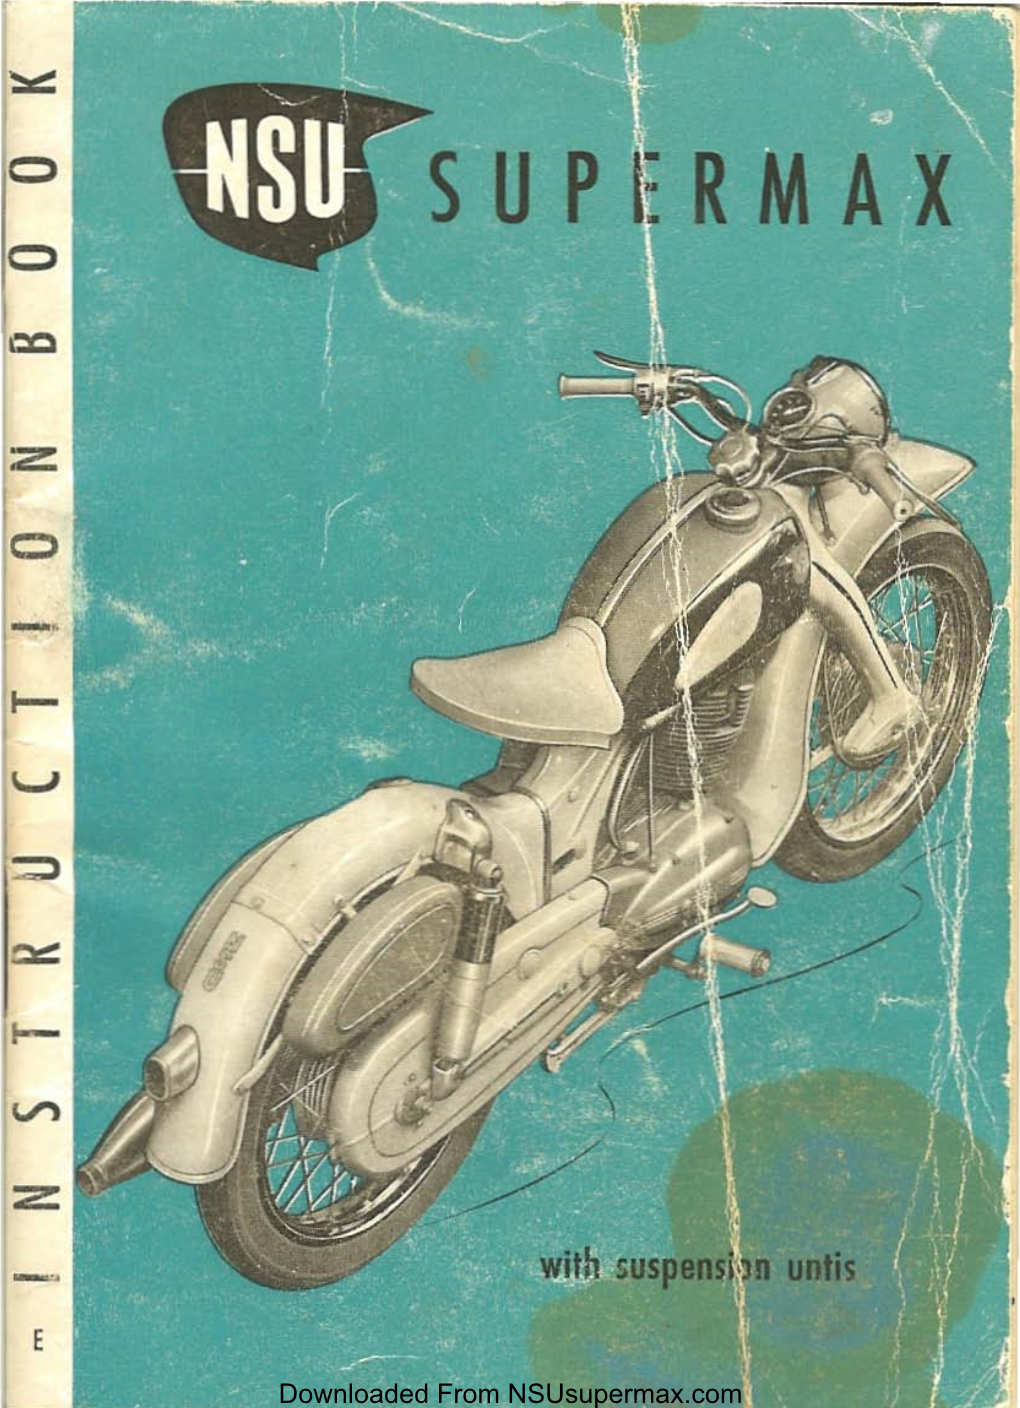 NSU Supermax Owner's Manual